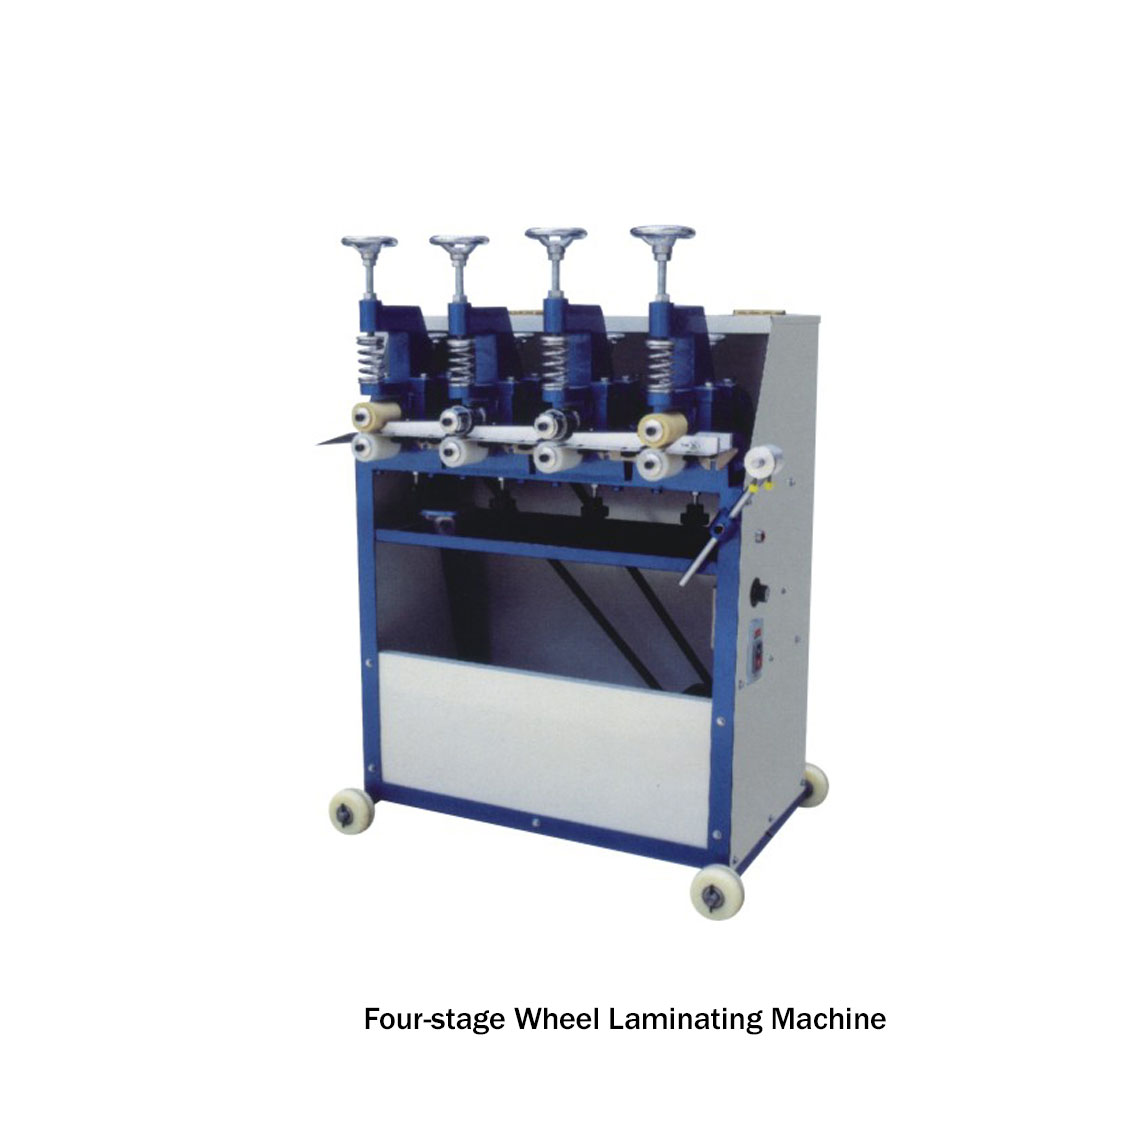 Four-stage Wheel Laminating Machine